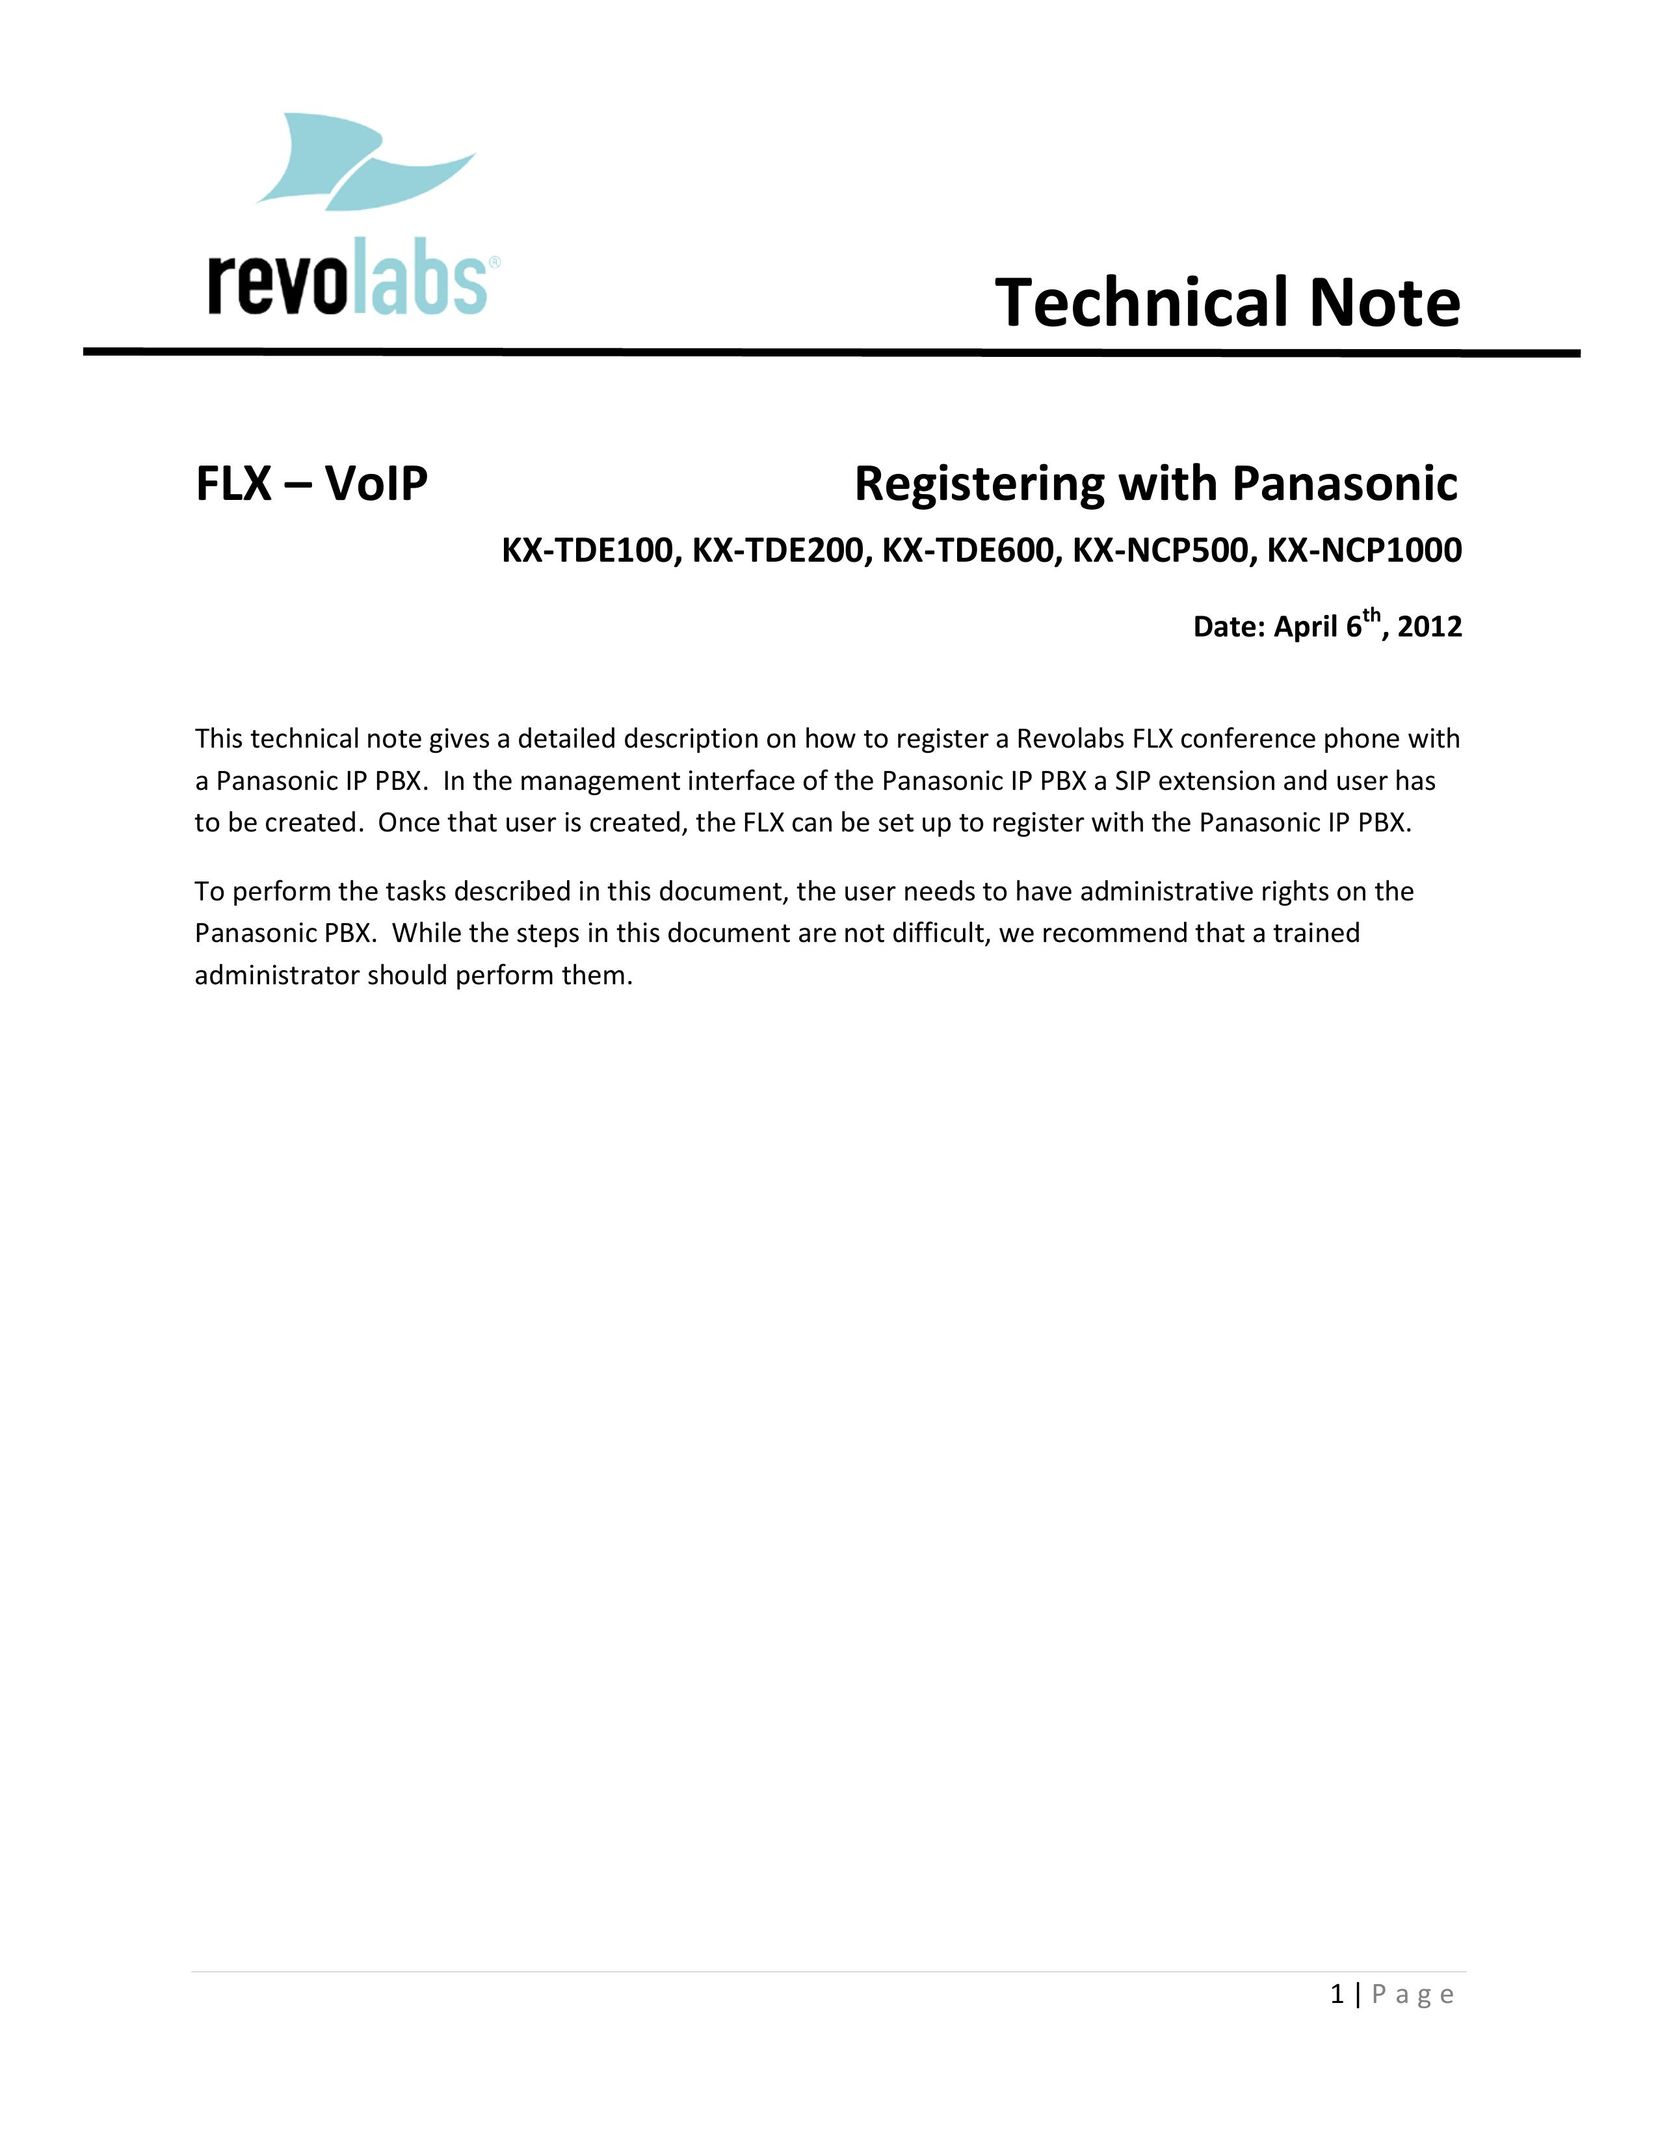 Revolabs KX-TDE600 Amplified Phone User Manual